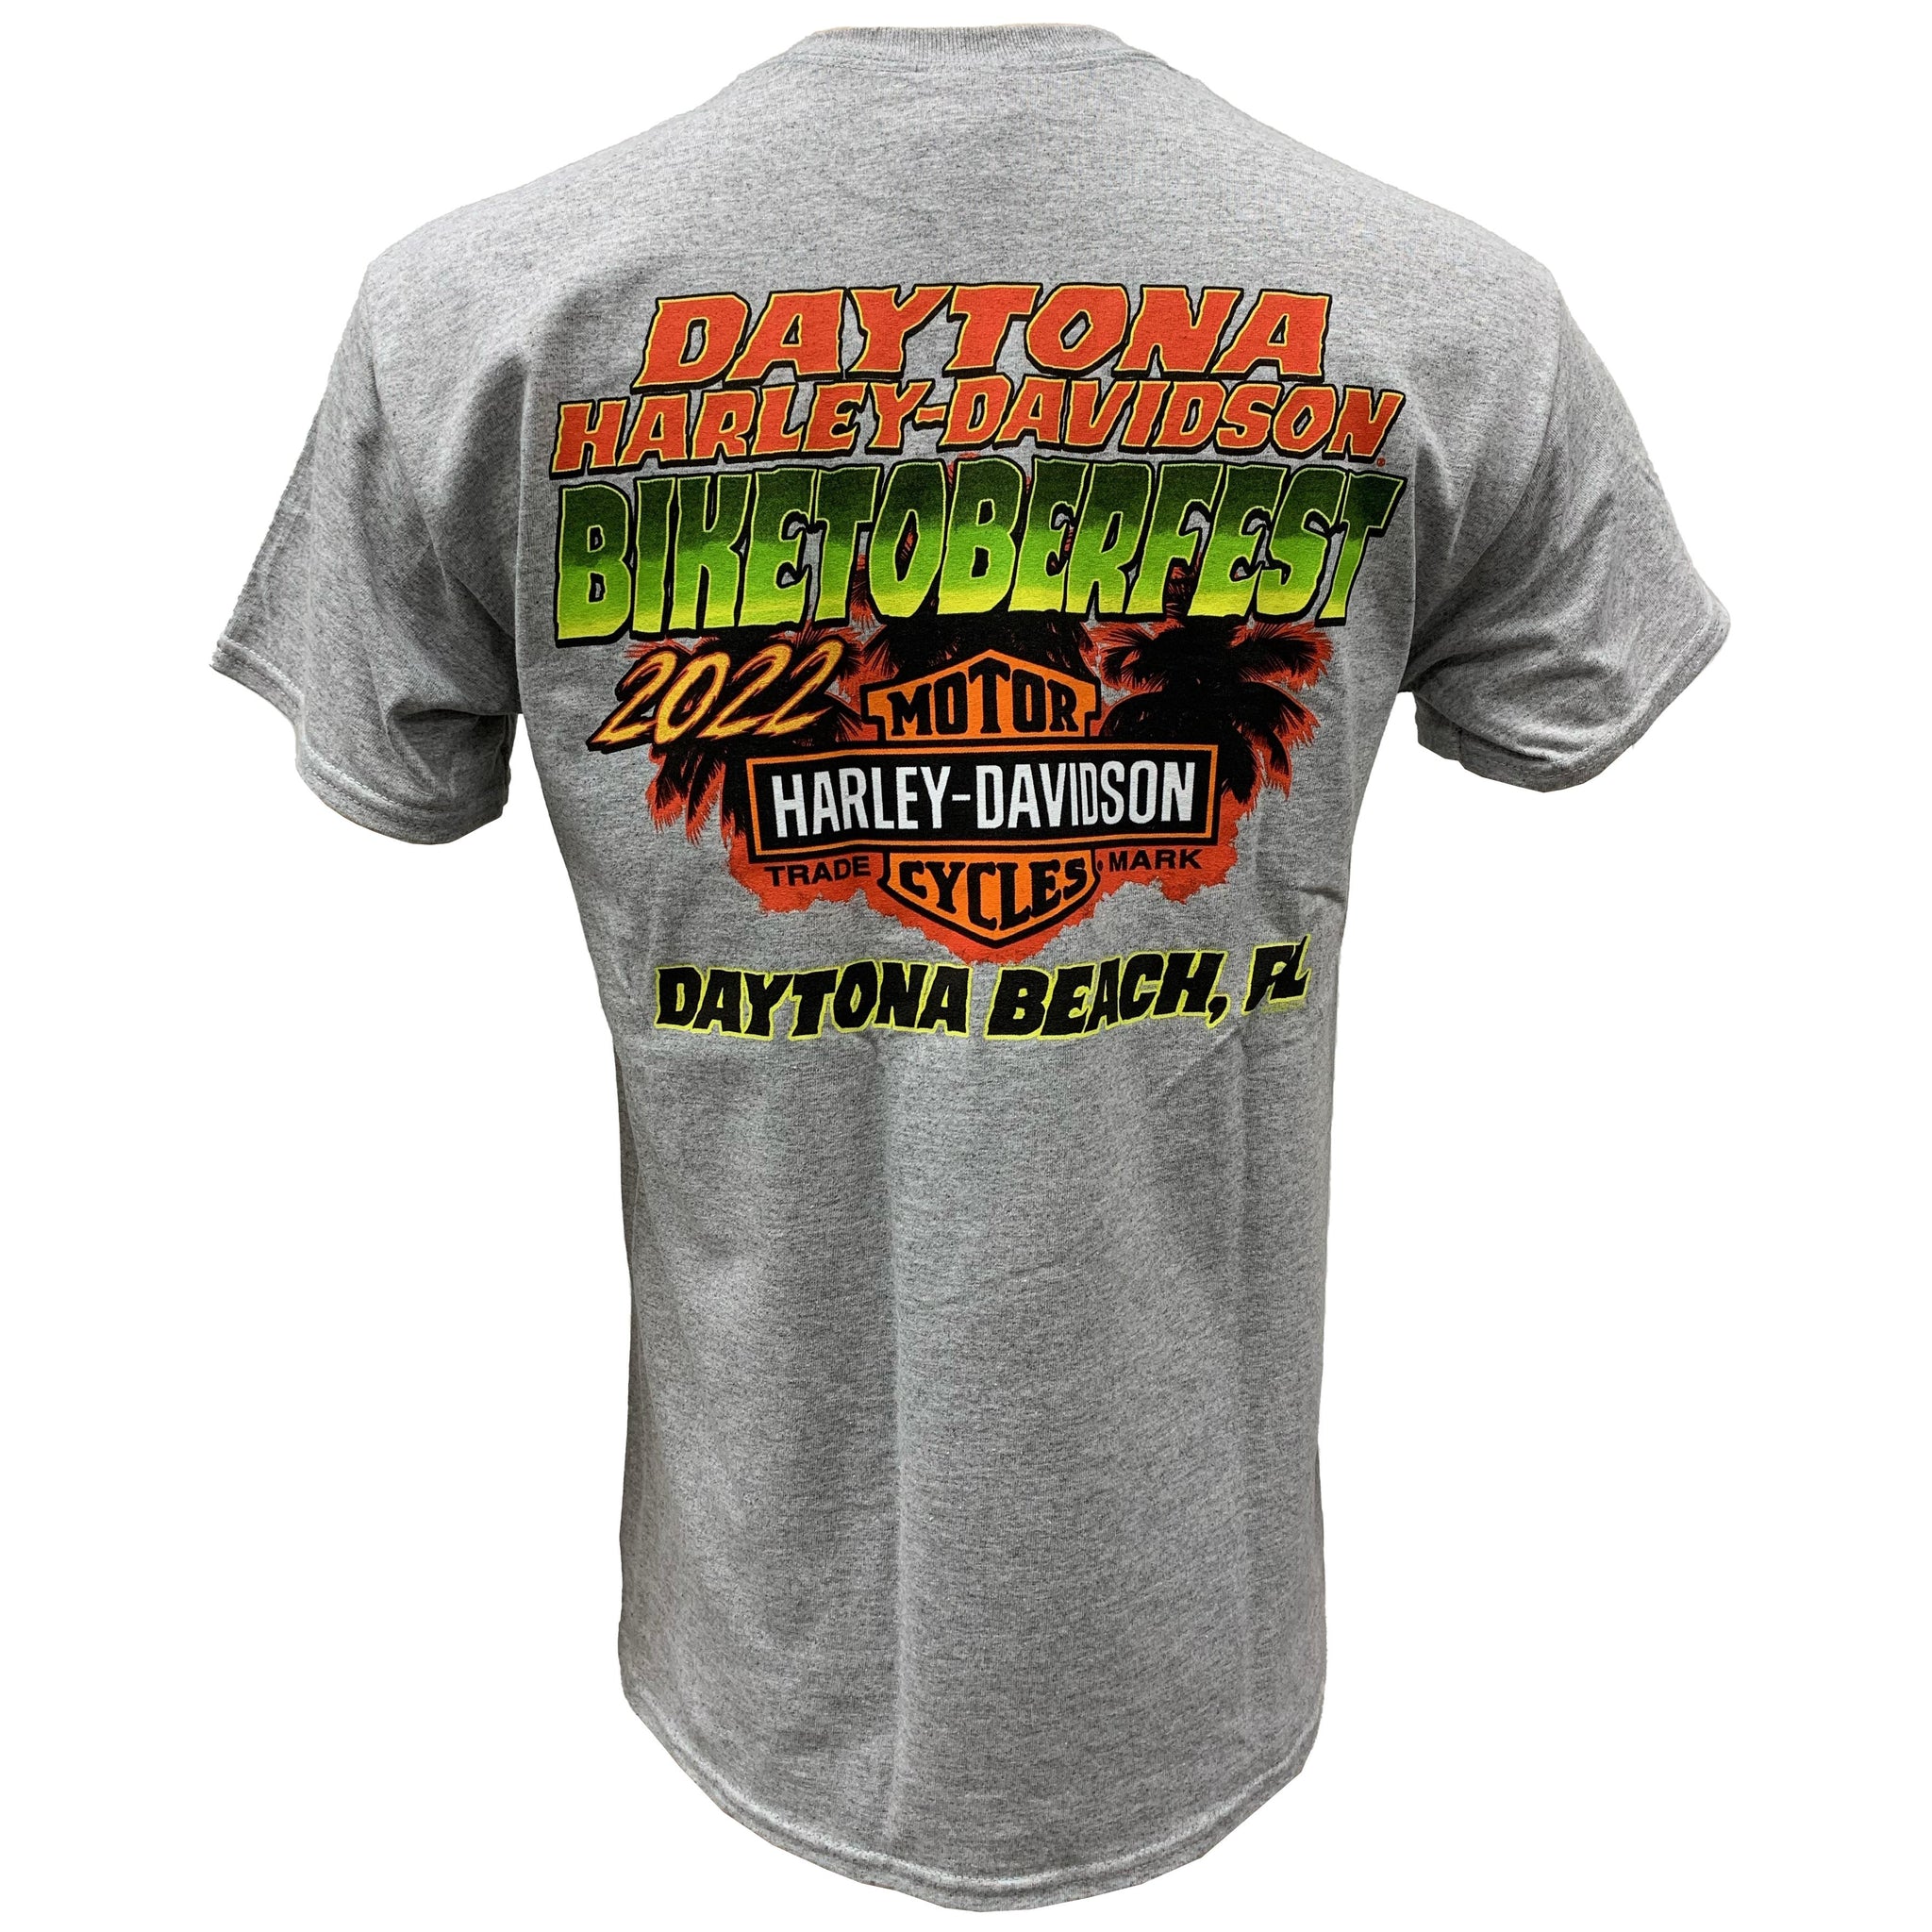 Biketoberfest 2022 Men\'s Harley-Davidson Rat Shirt Gray Daytona S/S – Gator Fink Heather